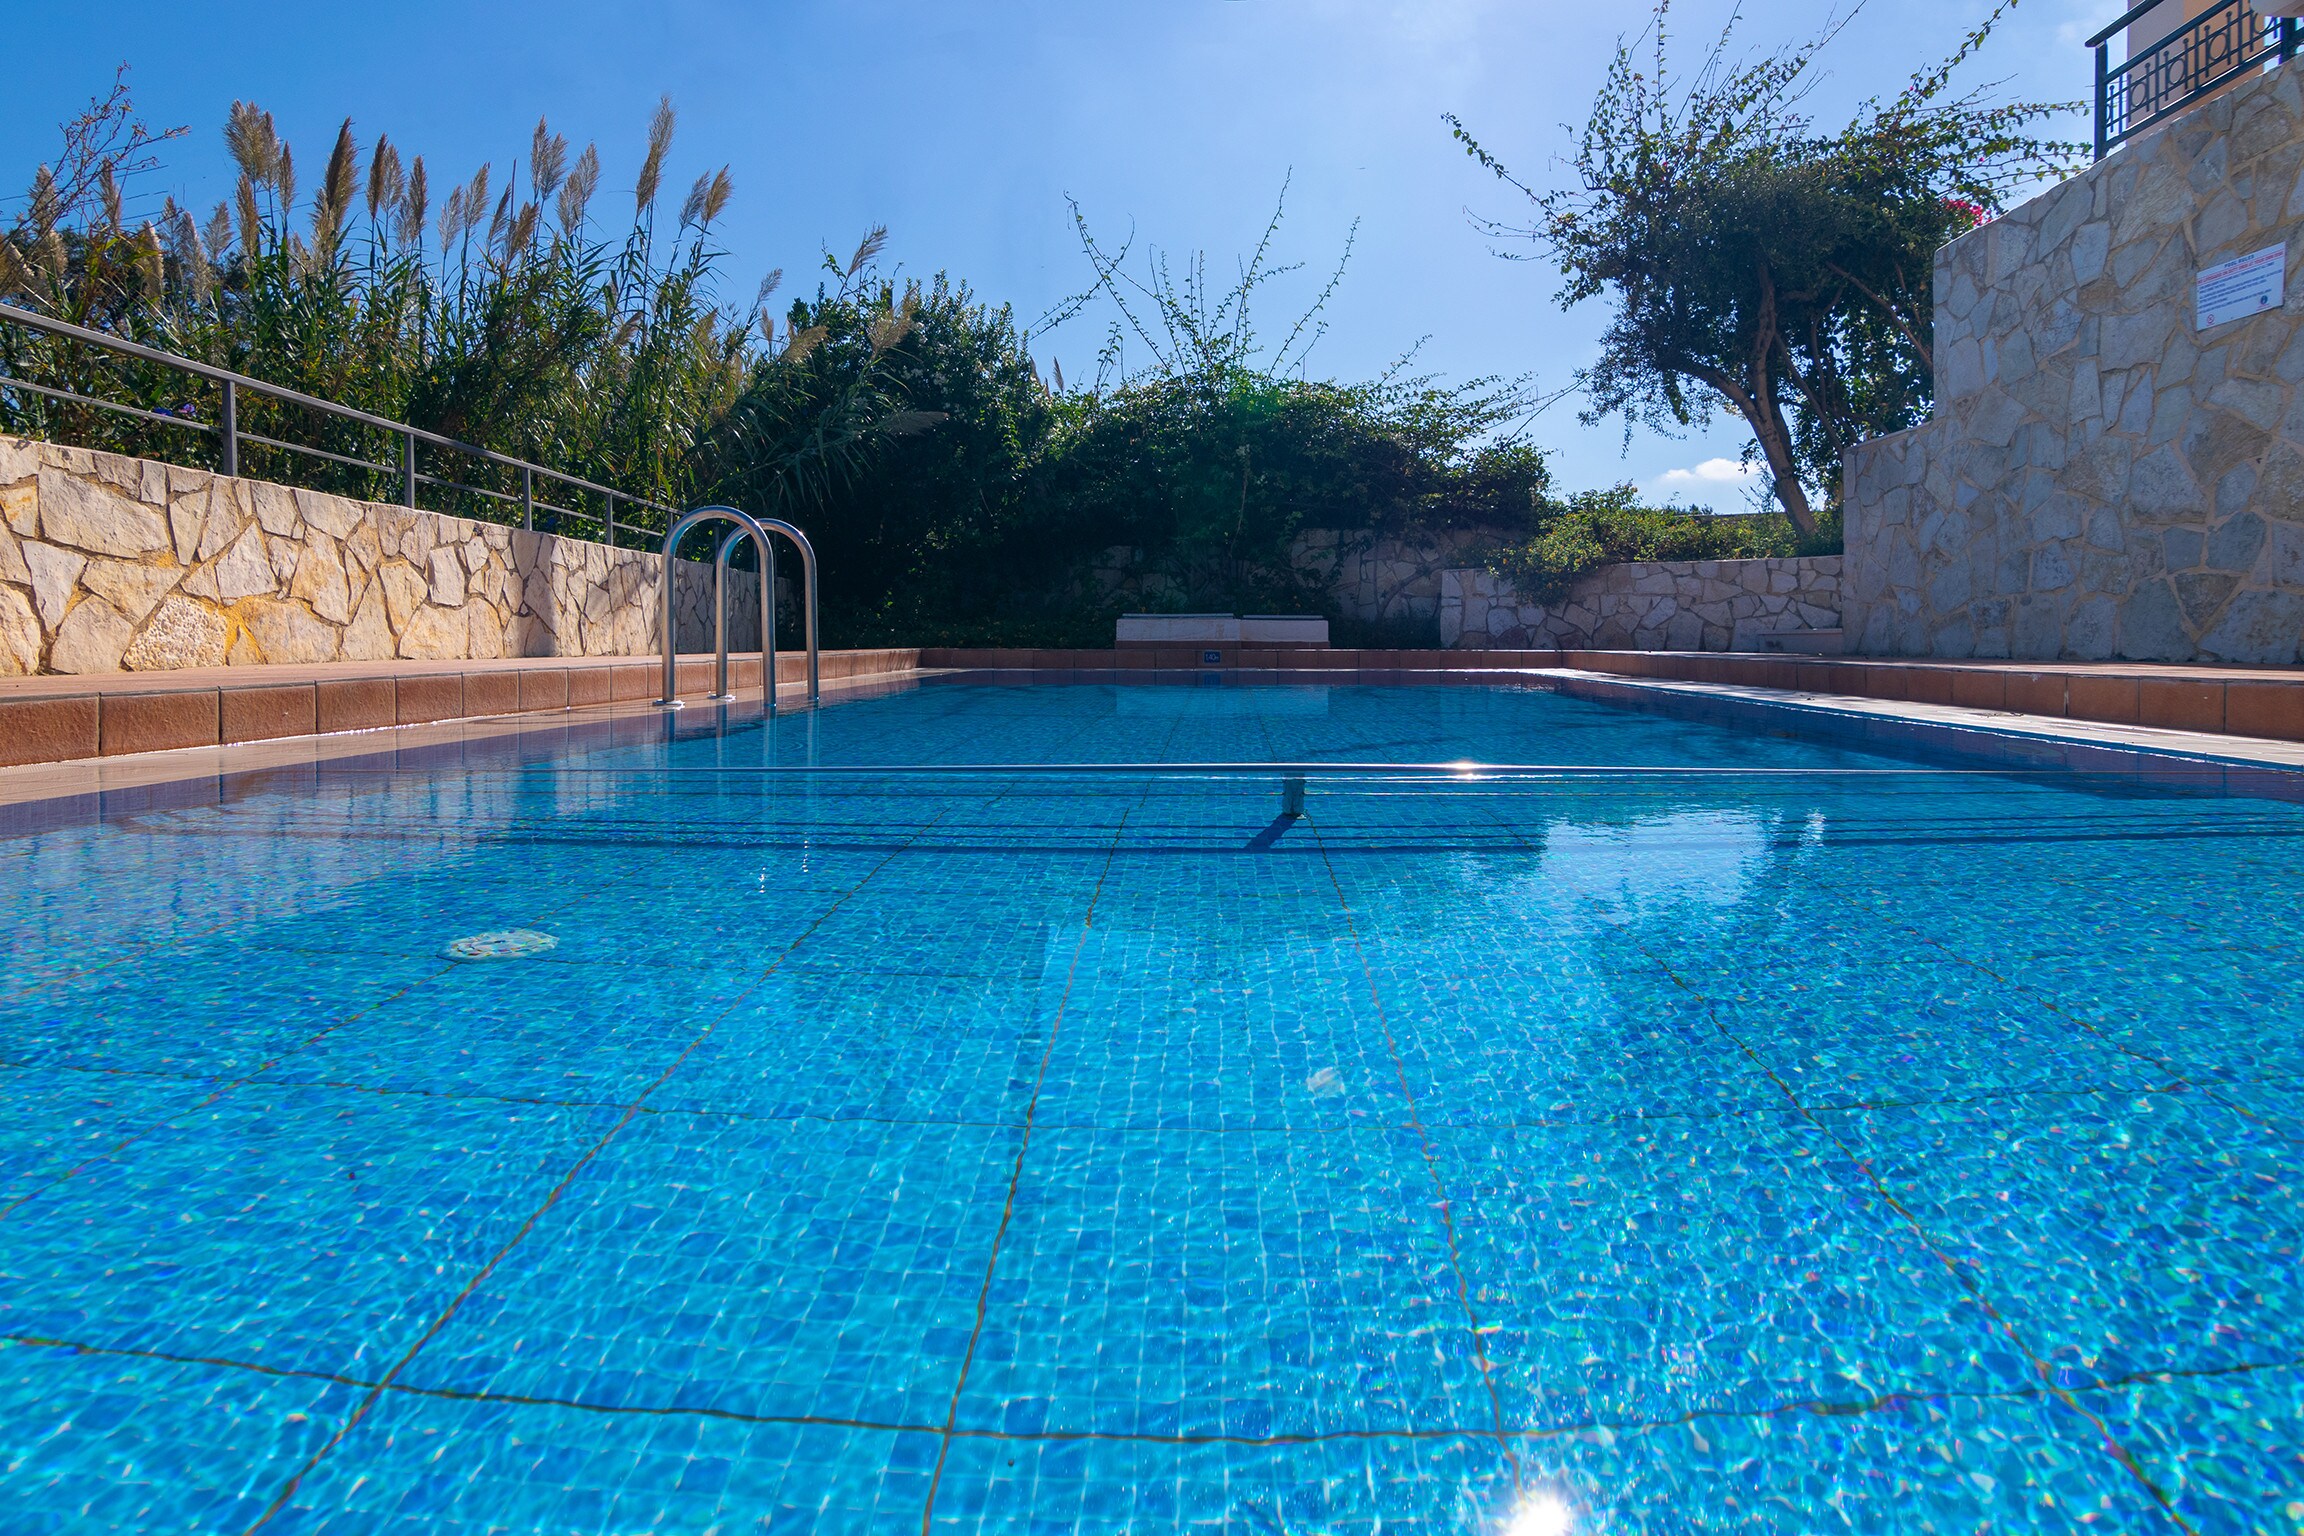 Swimming pool area of the villa in Walking distance to the beach, Near tavern, Chania, Crete